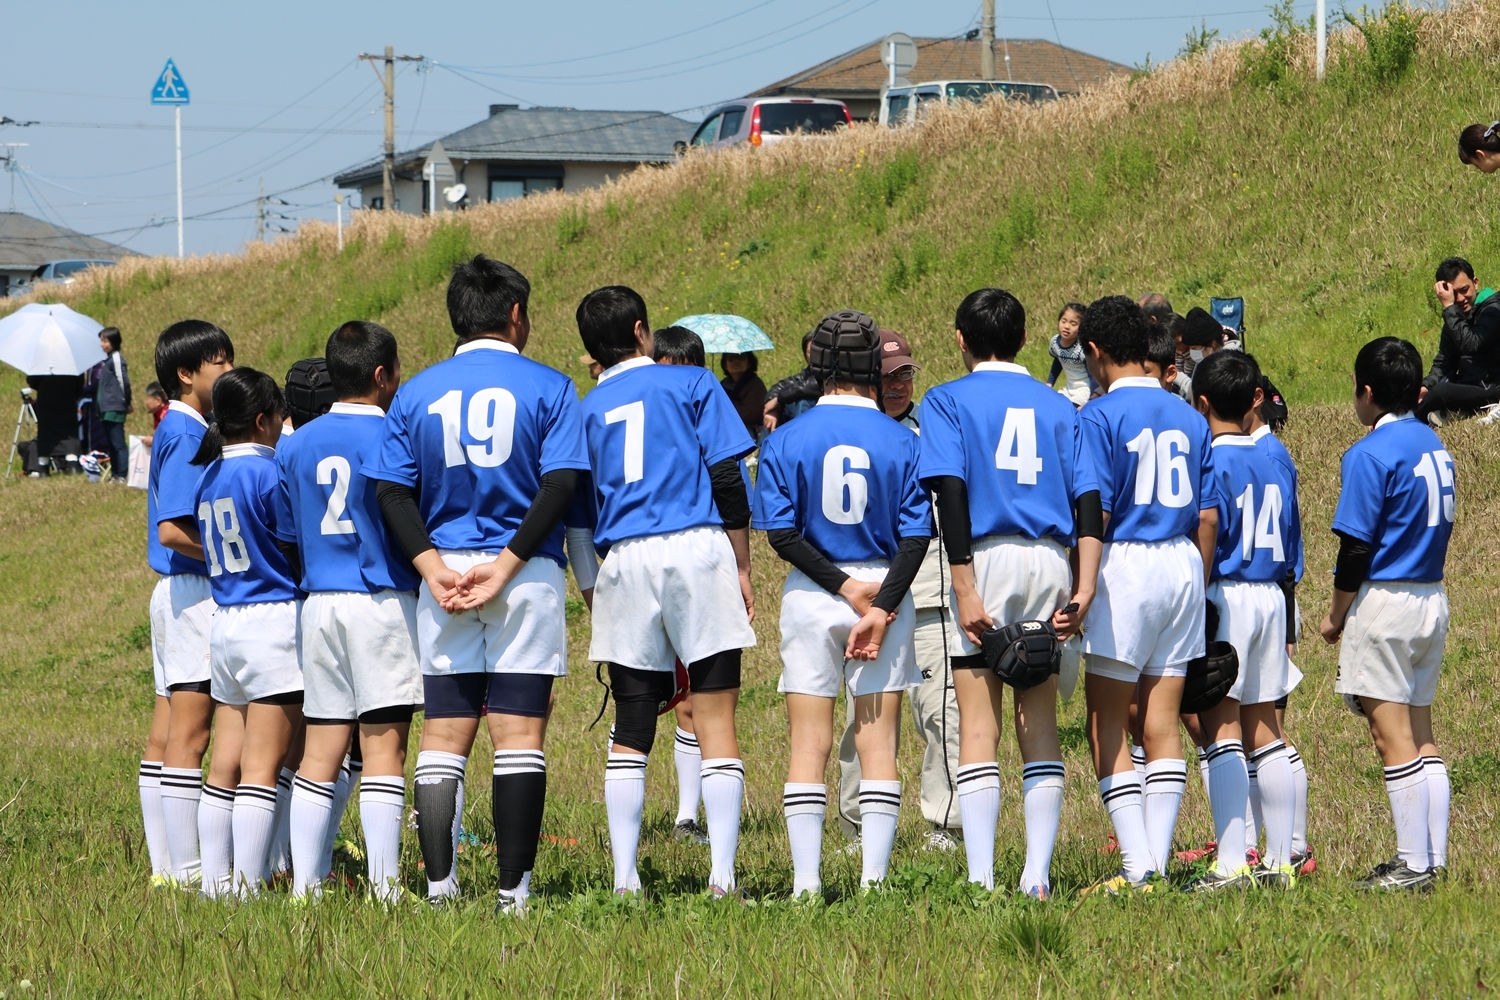 youngwave_kitakyusyu_rugby_school006.JPG